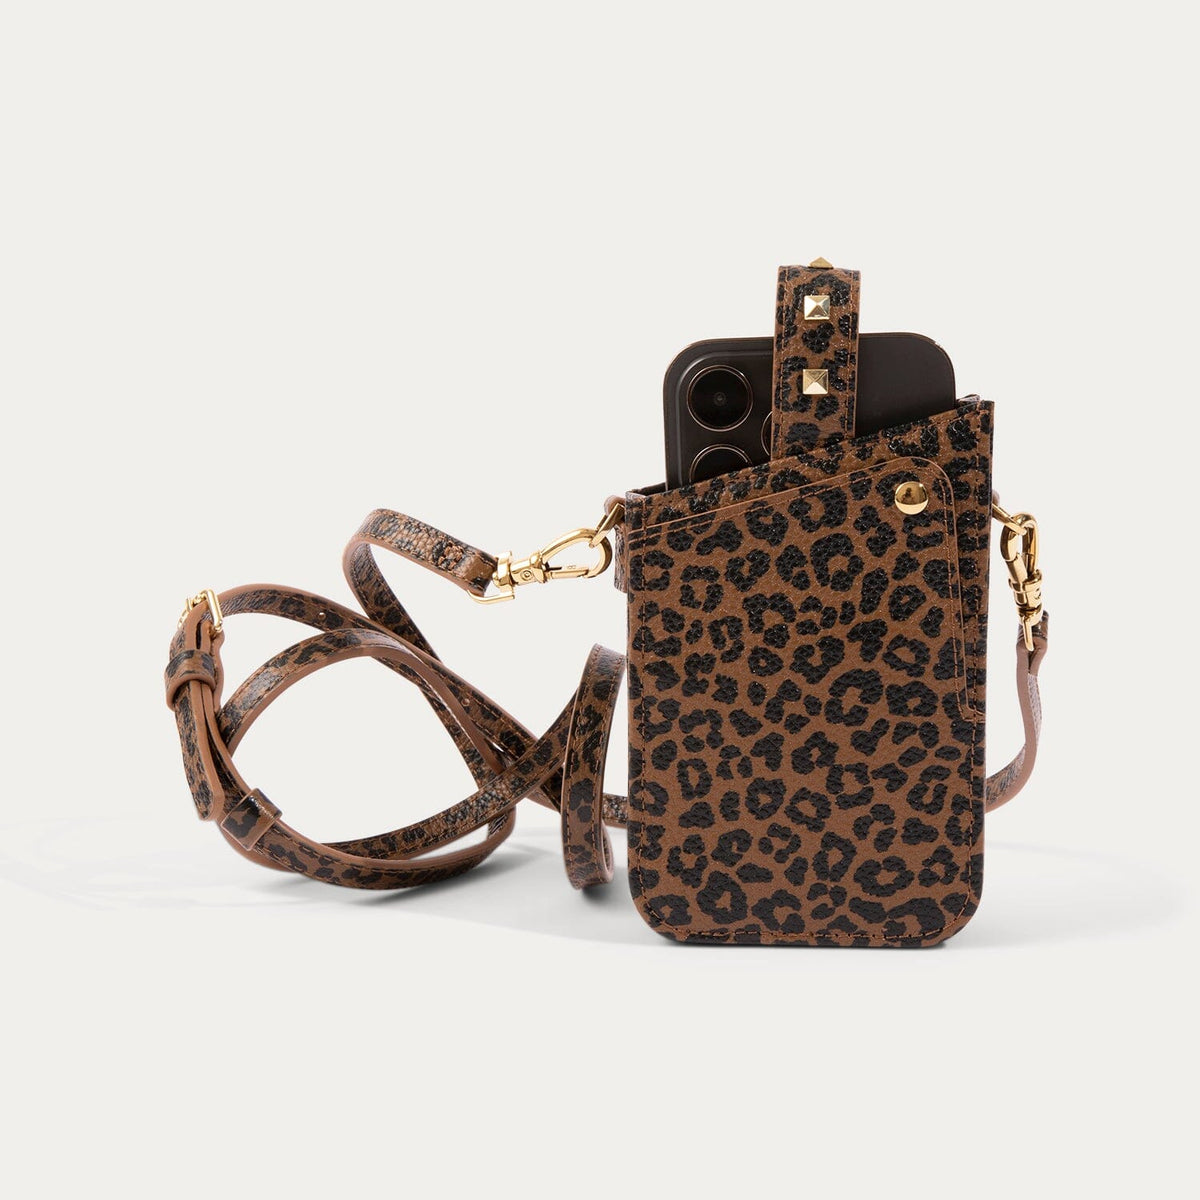 Gia Leopard LV Fringe Handbag  Fringe purse outfit, Fashion